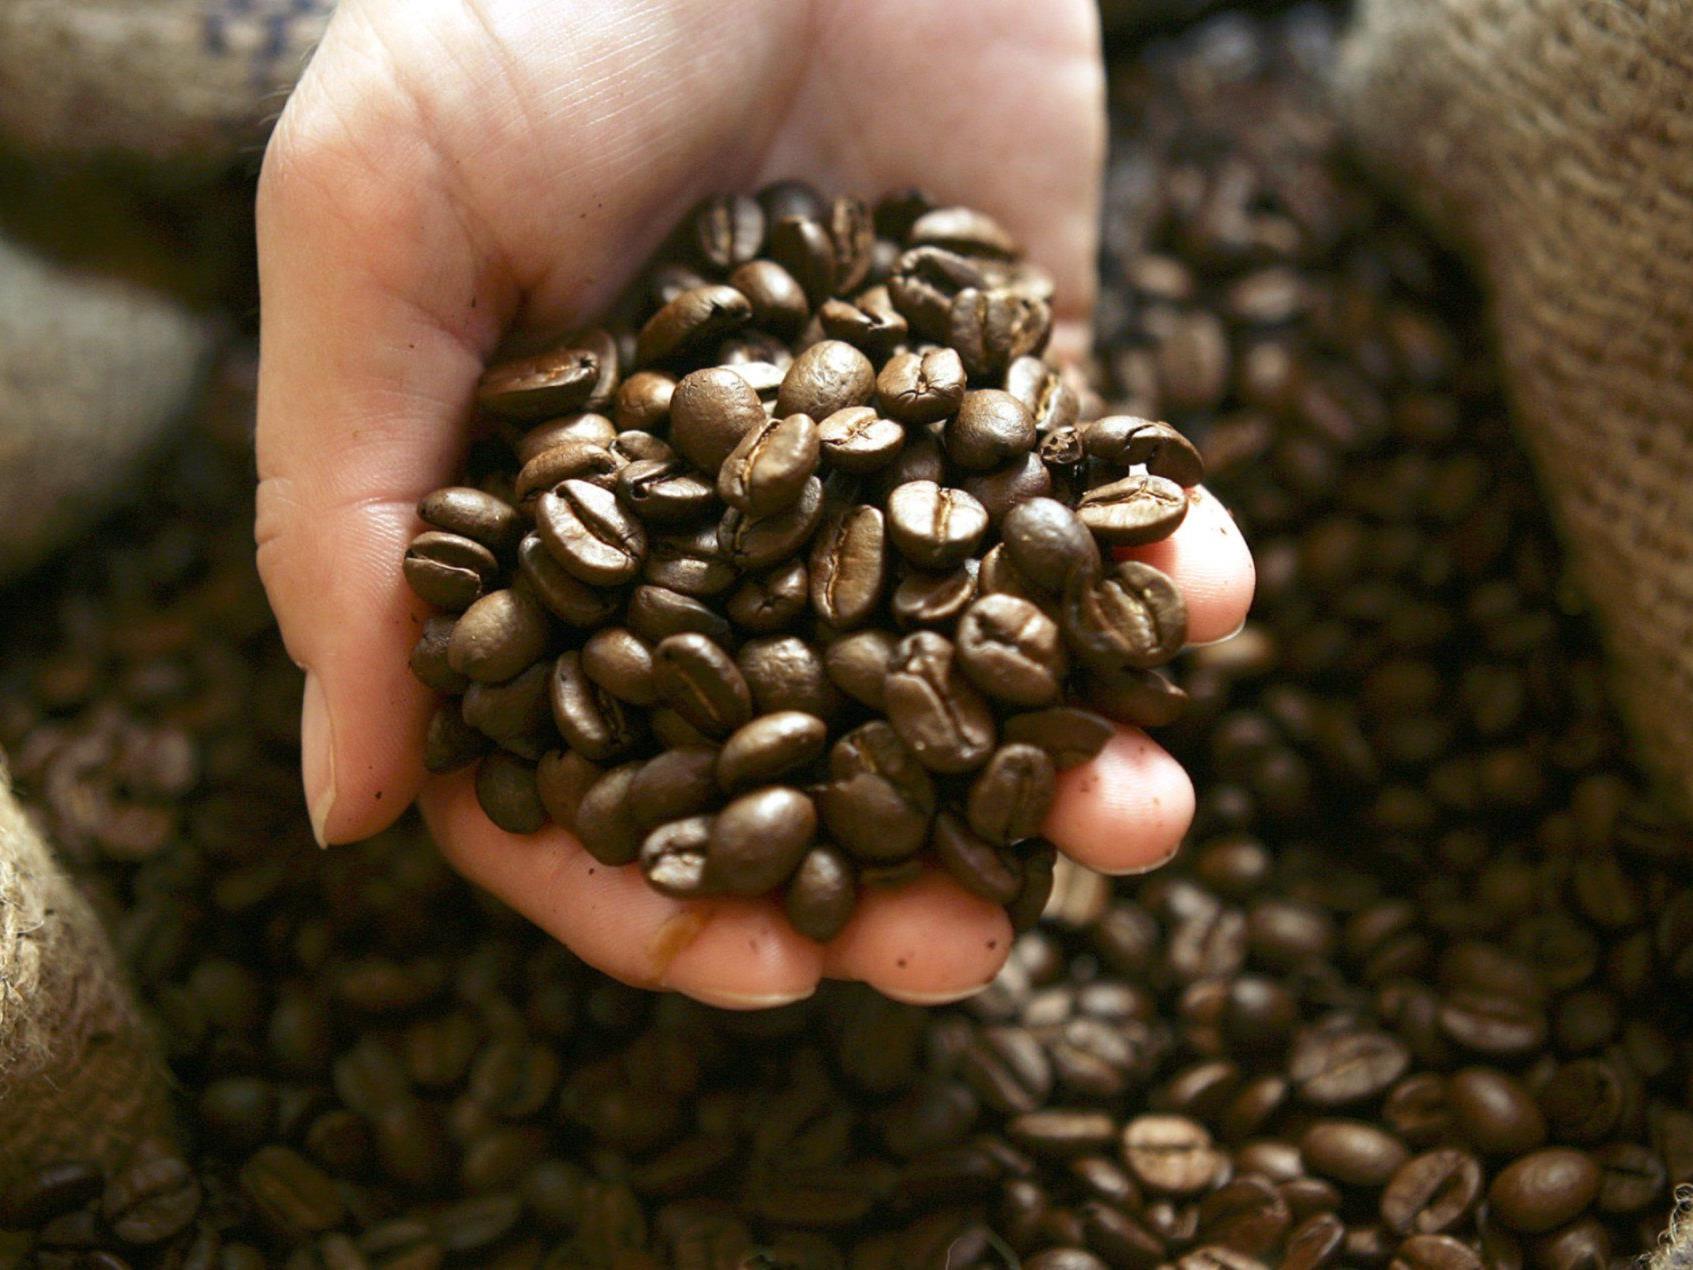 Meinl Kaffee nimmt England ins Visier - Weltmarke 2025 als Ziel